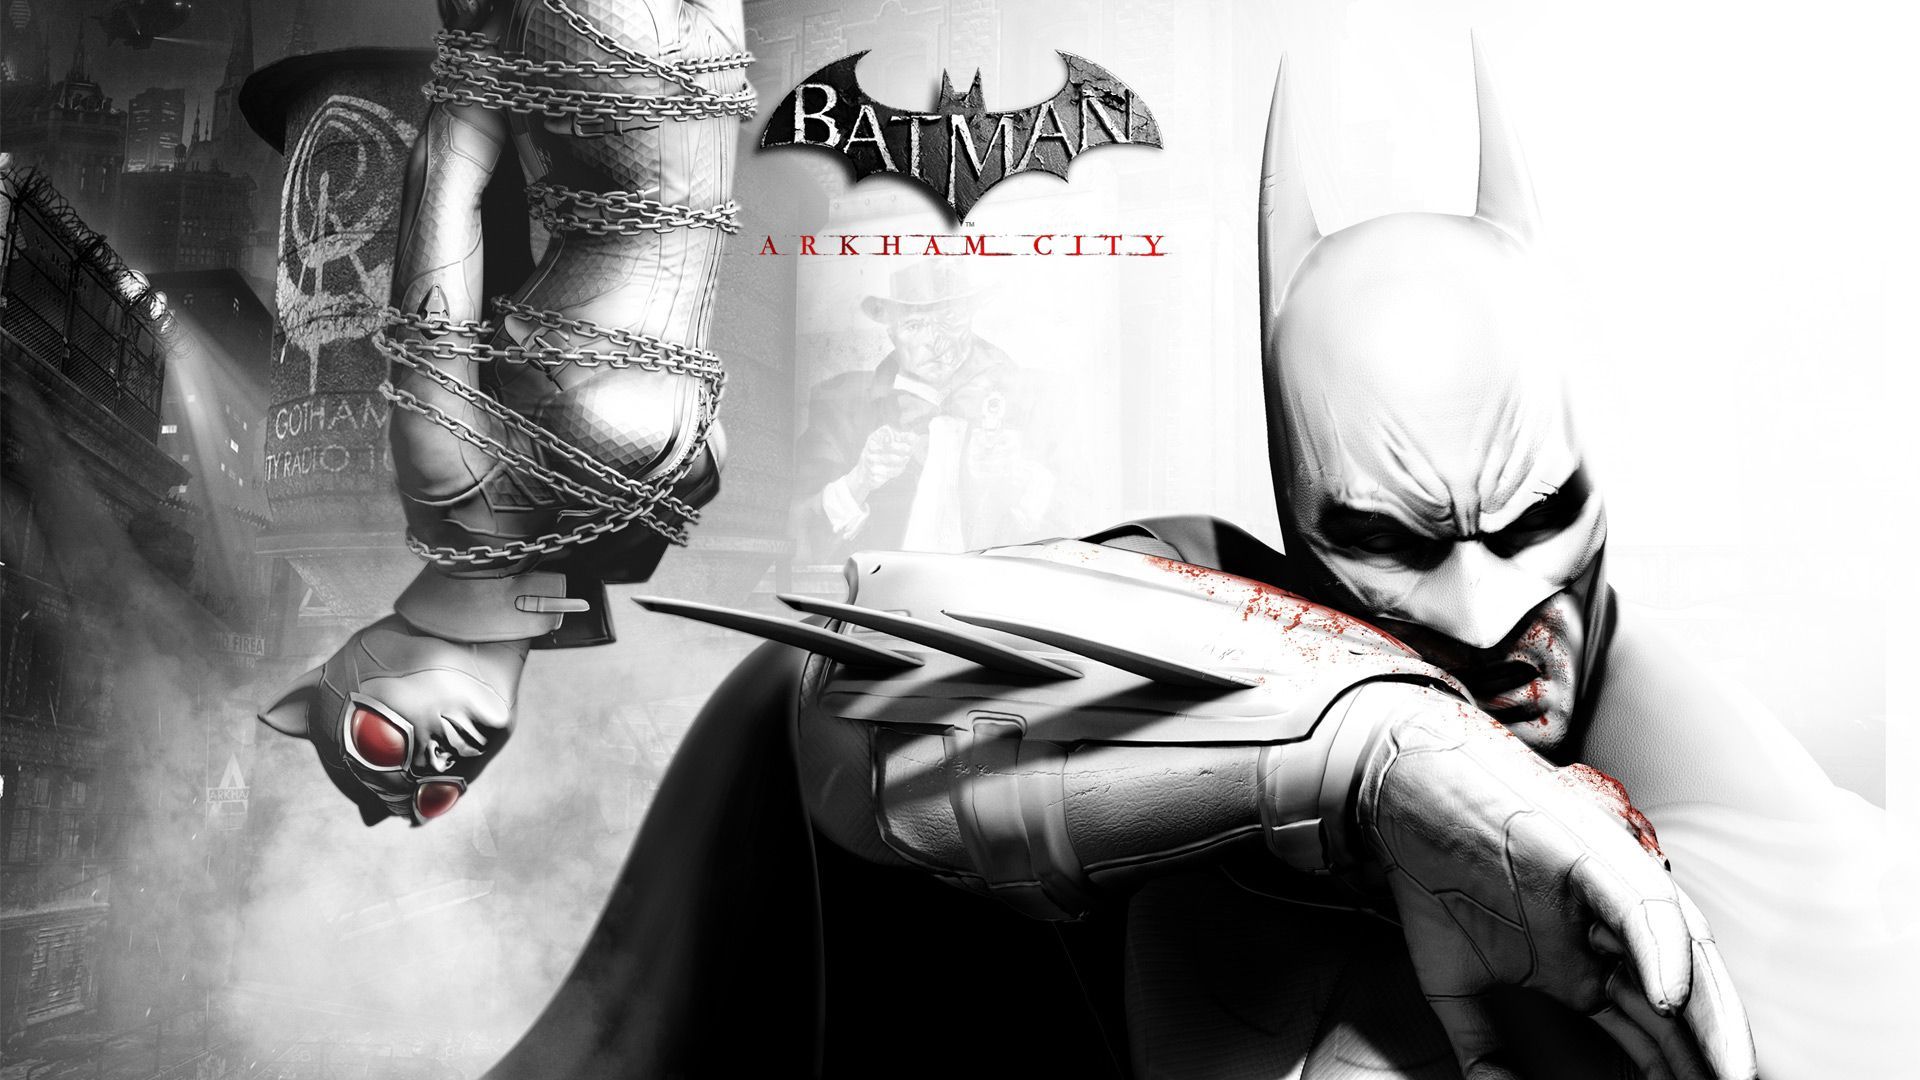 Batman Arkham City Video Game Wallpapers HD Backgrounds